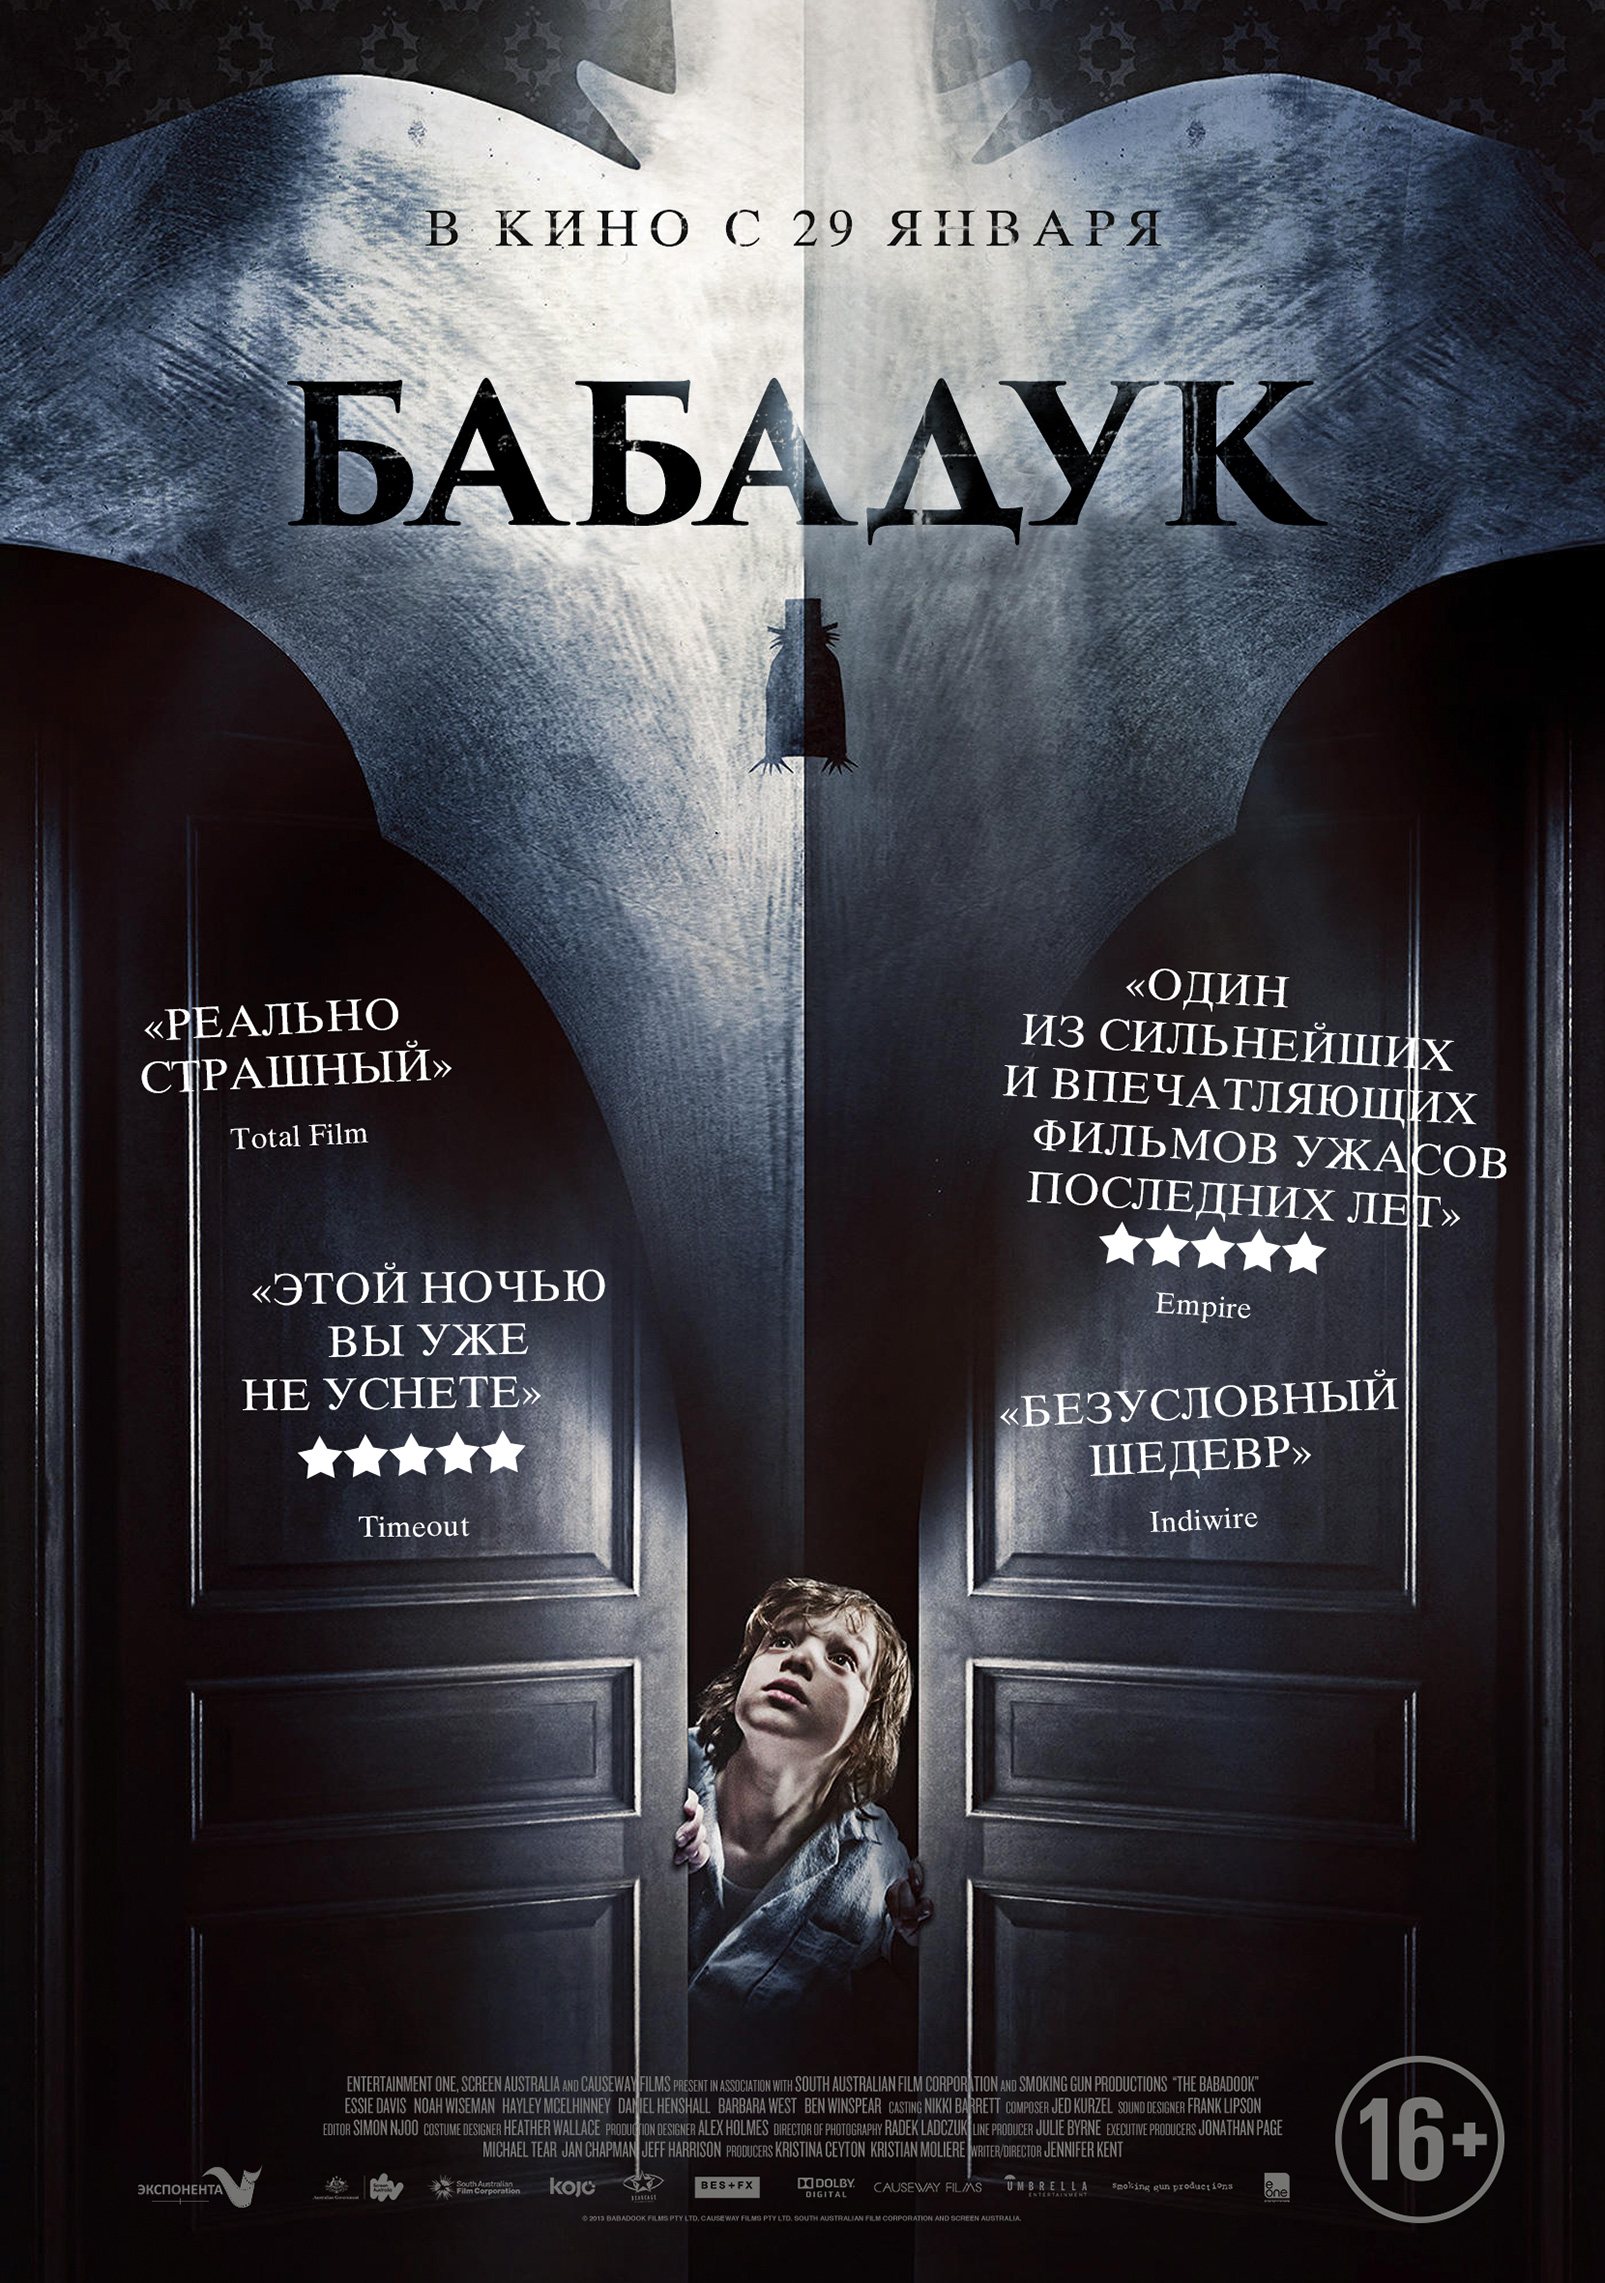 Фильм «Бабадук» / The Babadook (2014) — Трейлеры, Дата Выхода | КГ.